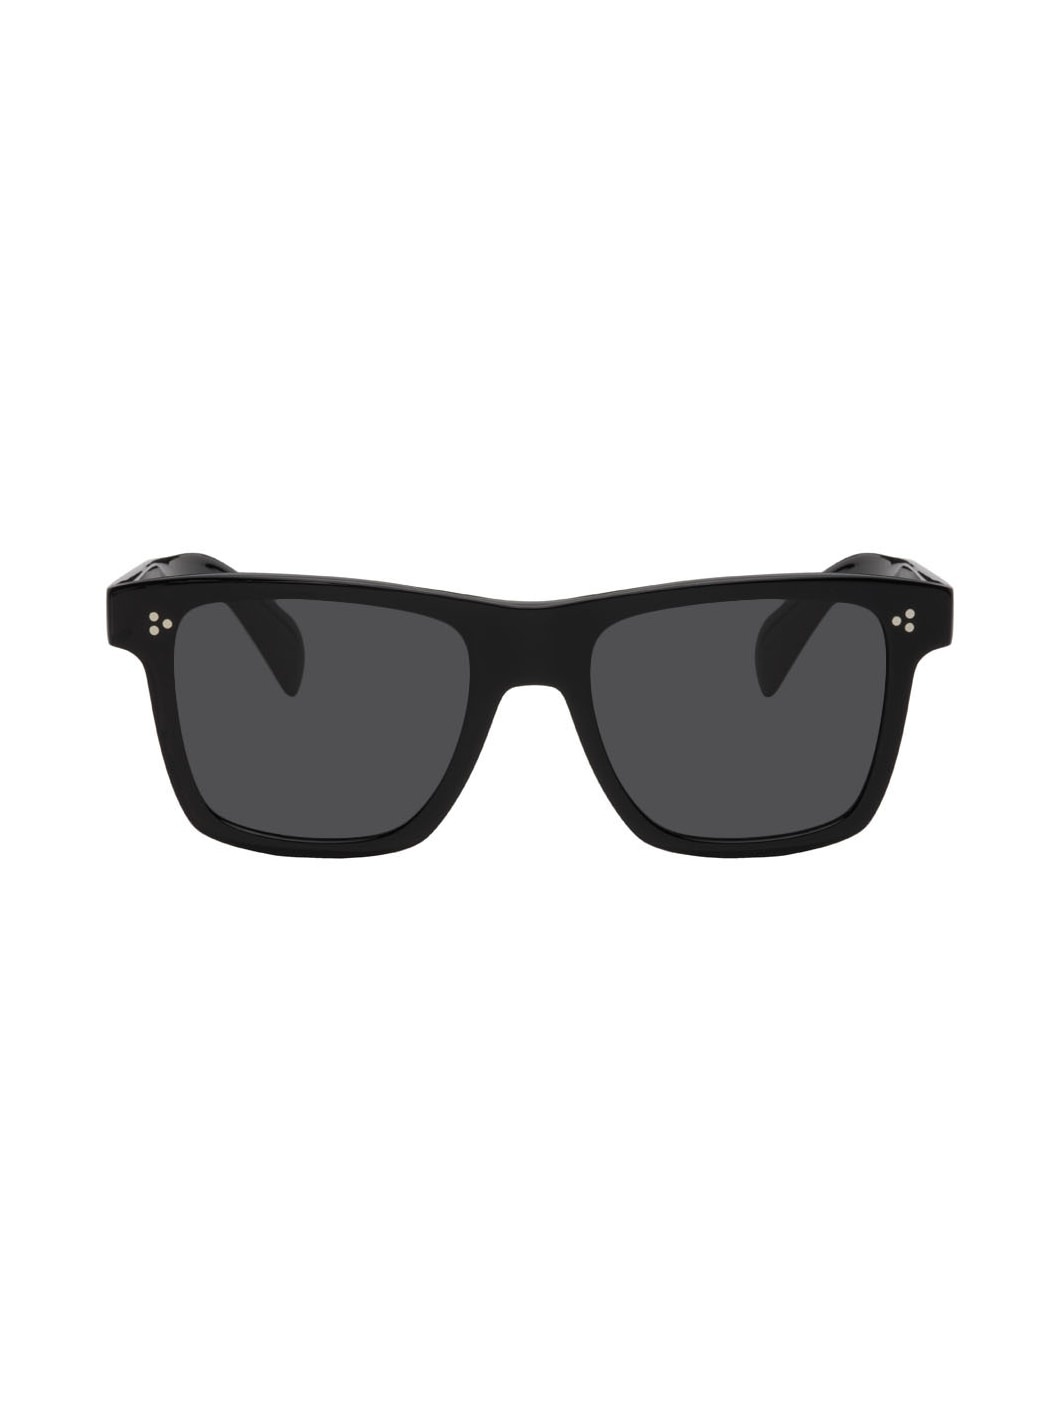 Black Casian Sunglasses - 1